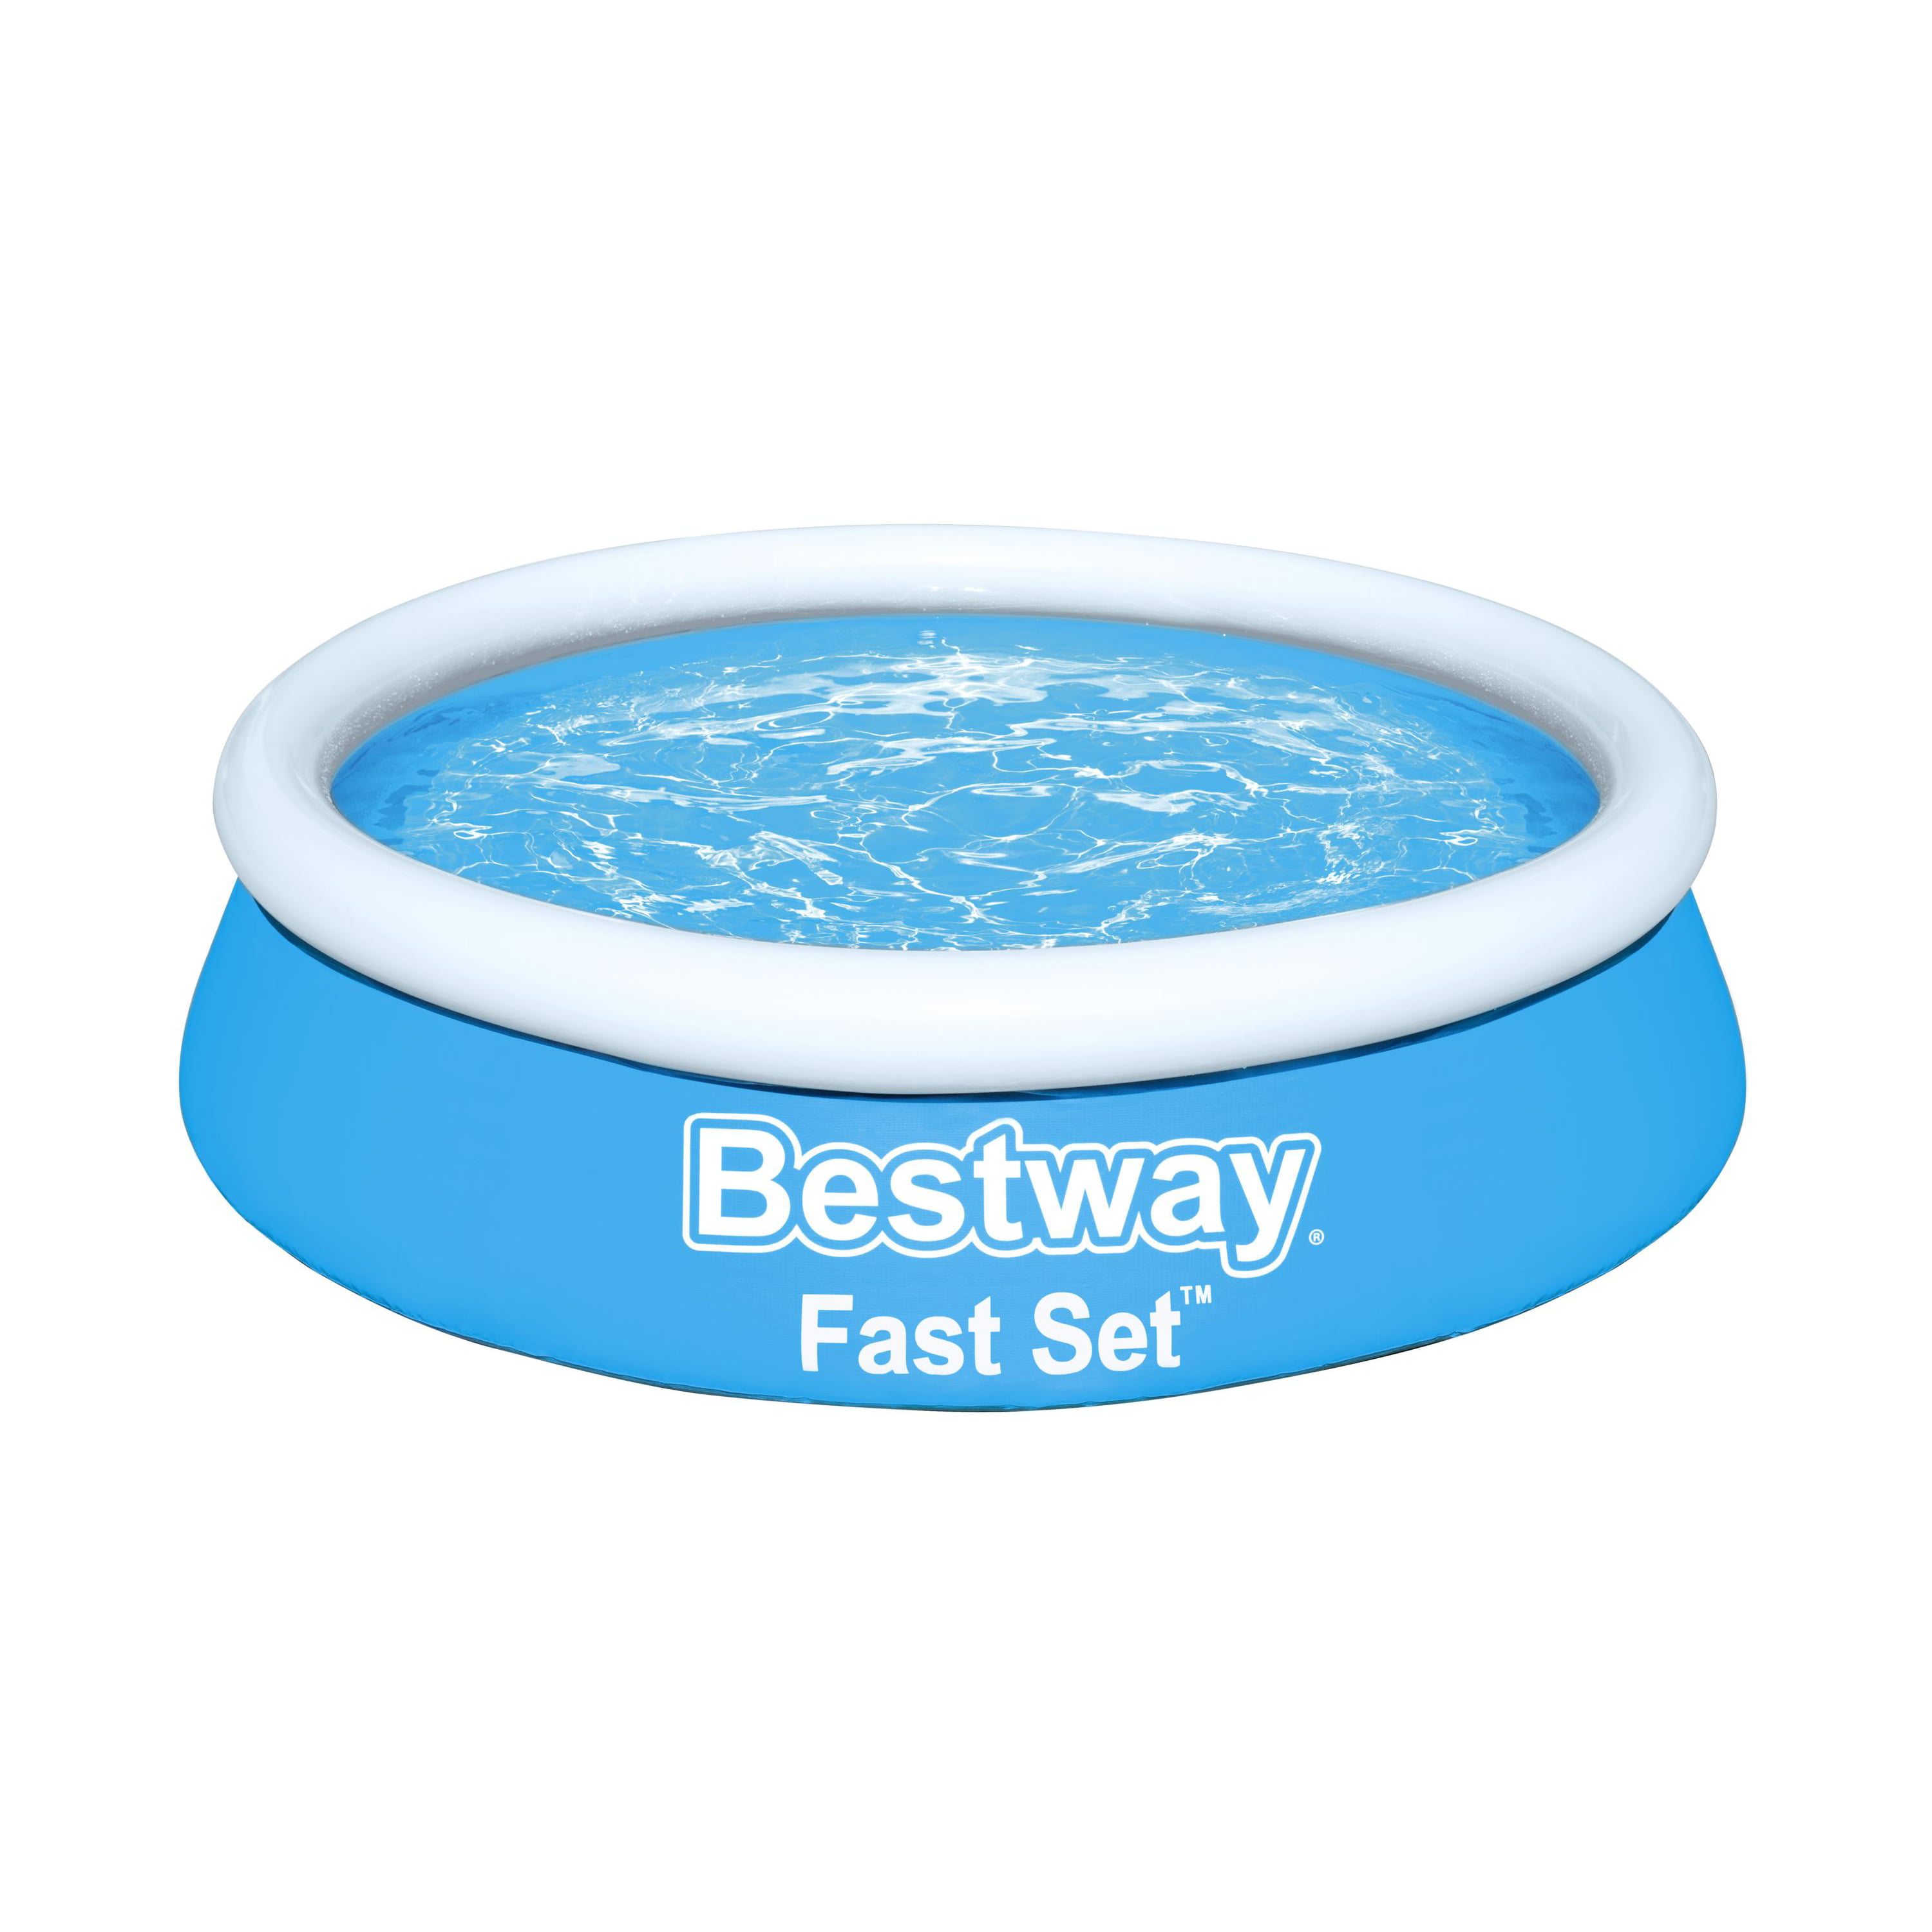 Bestway - Fast Set 6 x 20 Round Inflatable Pool